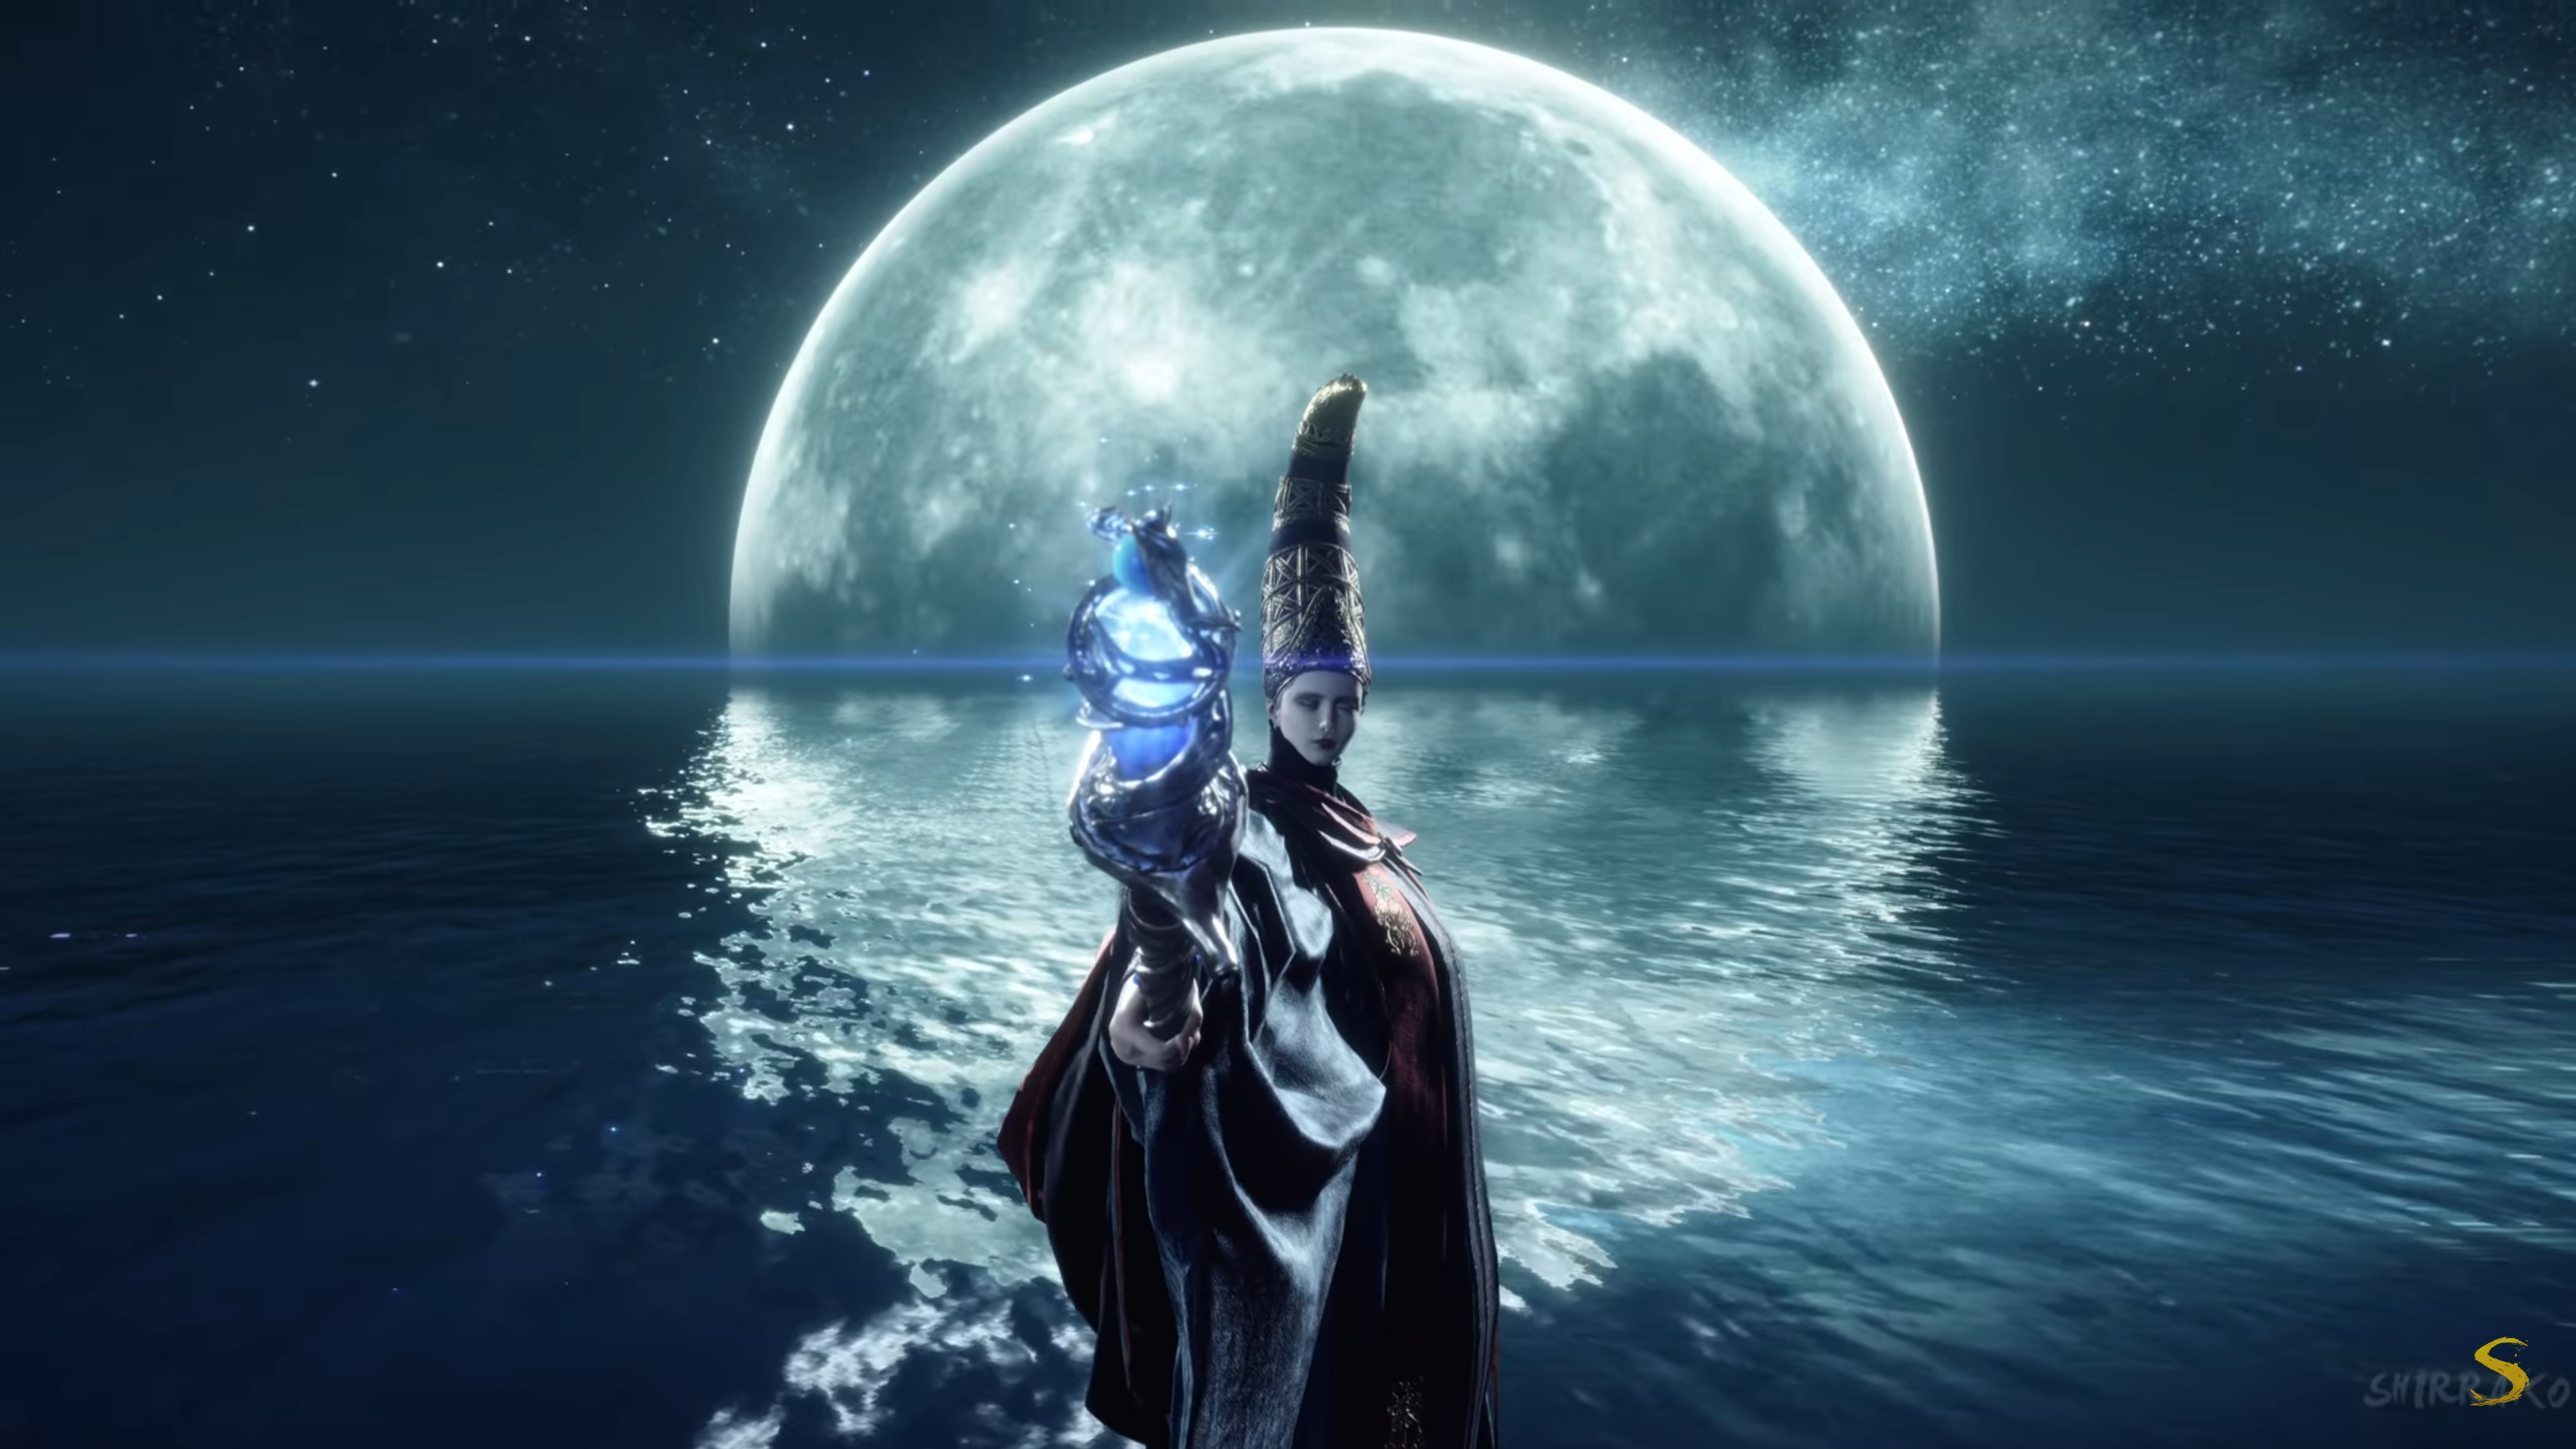 Rennala - Queen of The Full Moon